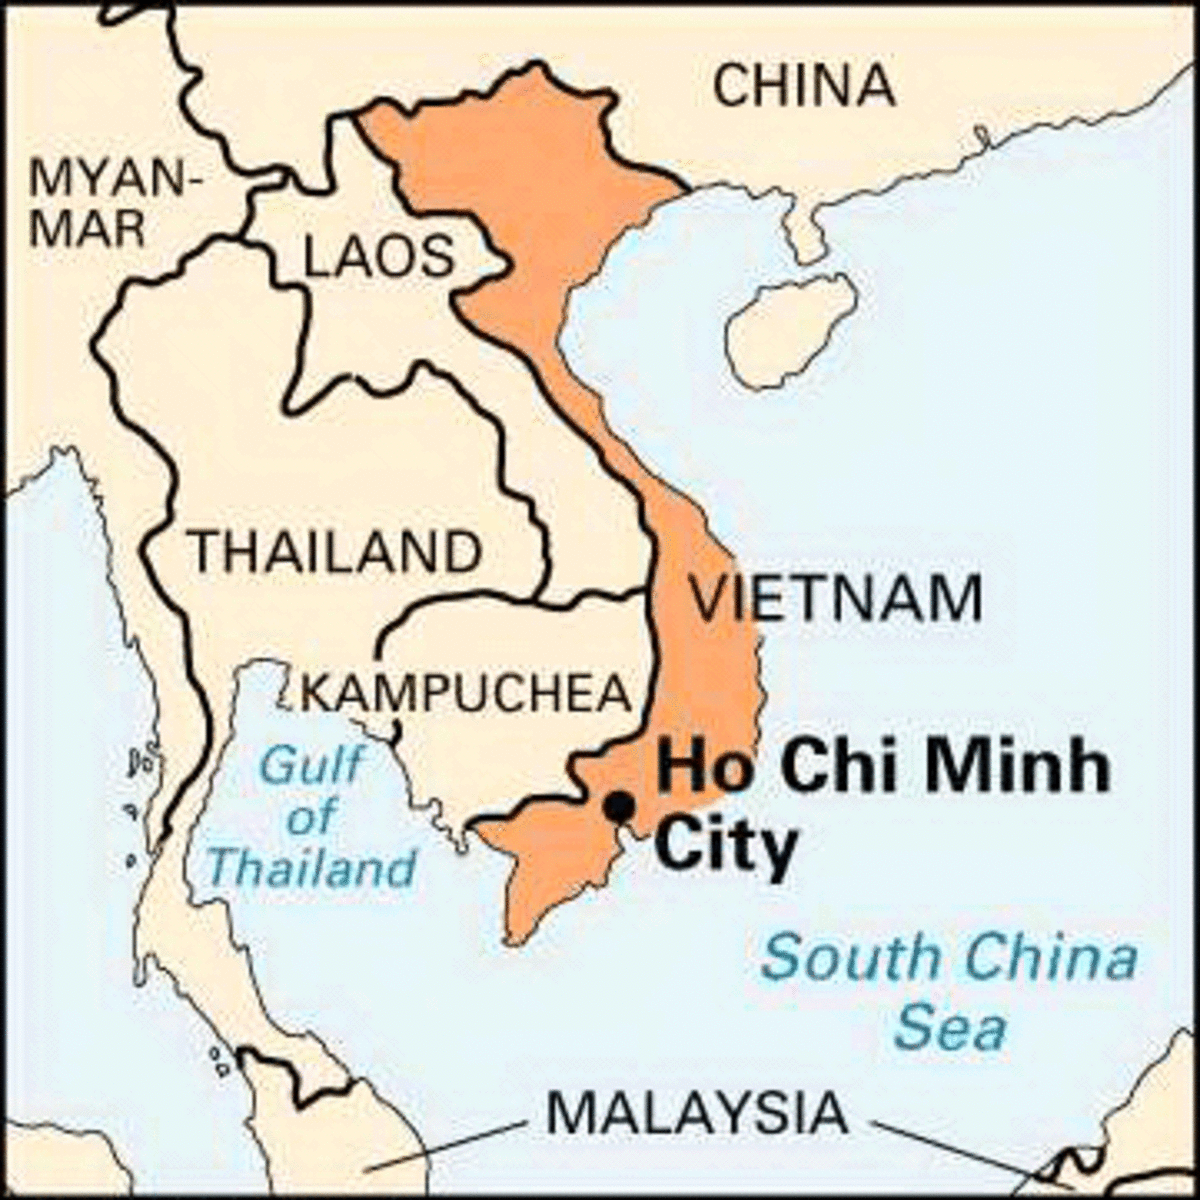 Ho Chi Minh City is 1,700 km south of Hanoi, 297 km east of Phnom Penh, Cambodia, and 881 km east of Bangkok, Thailand.